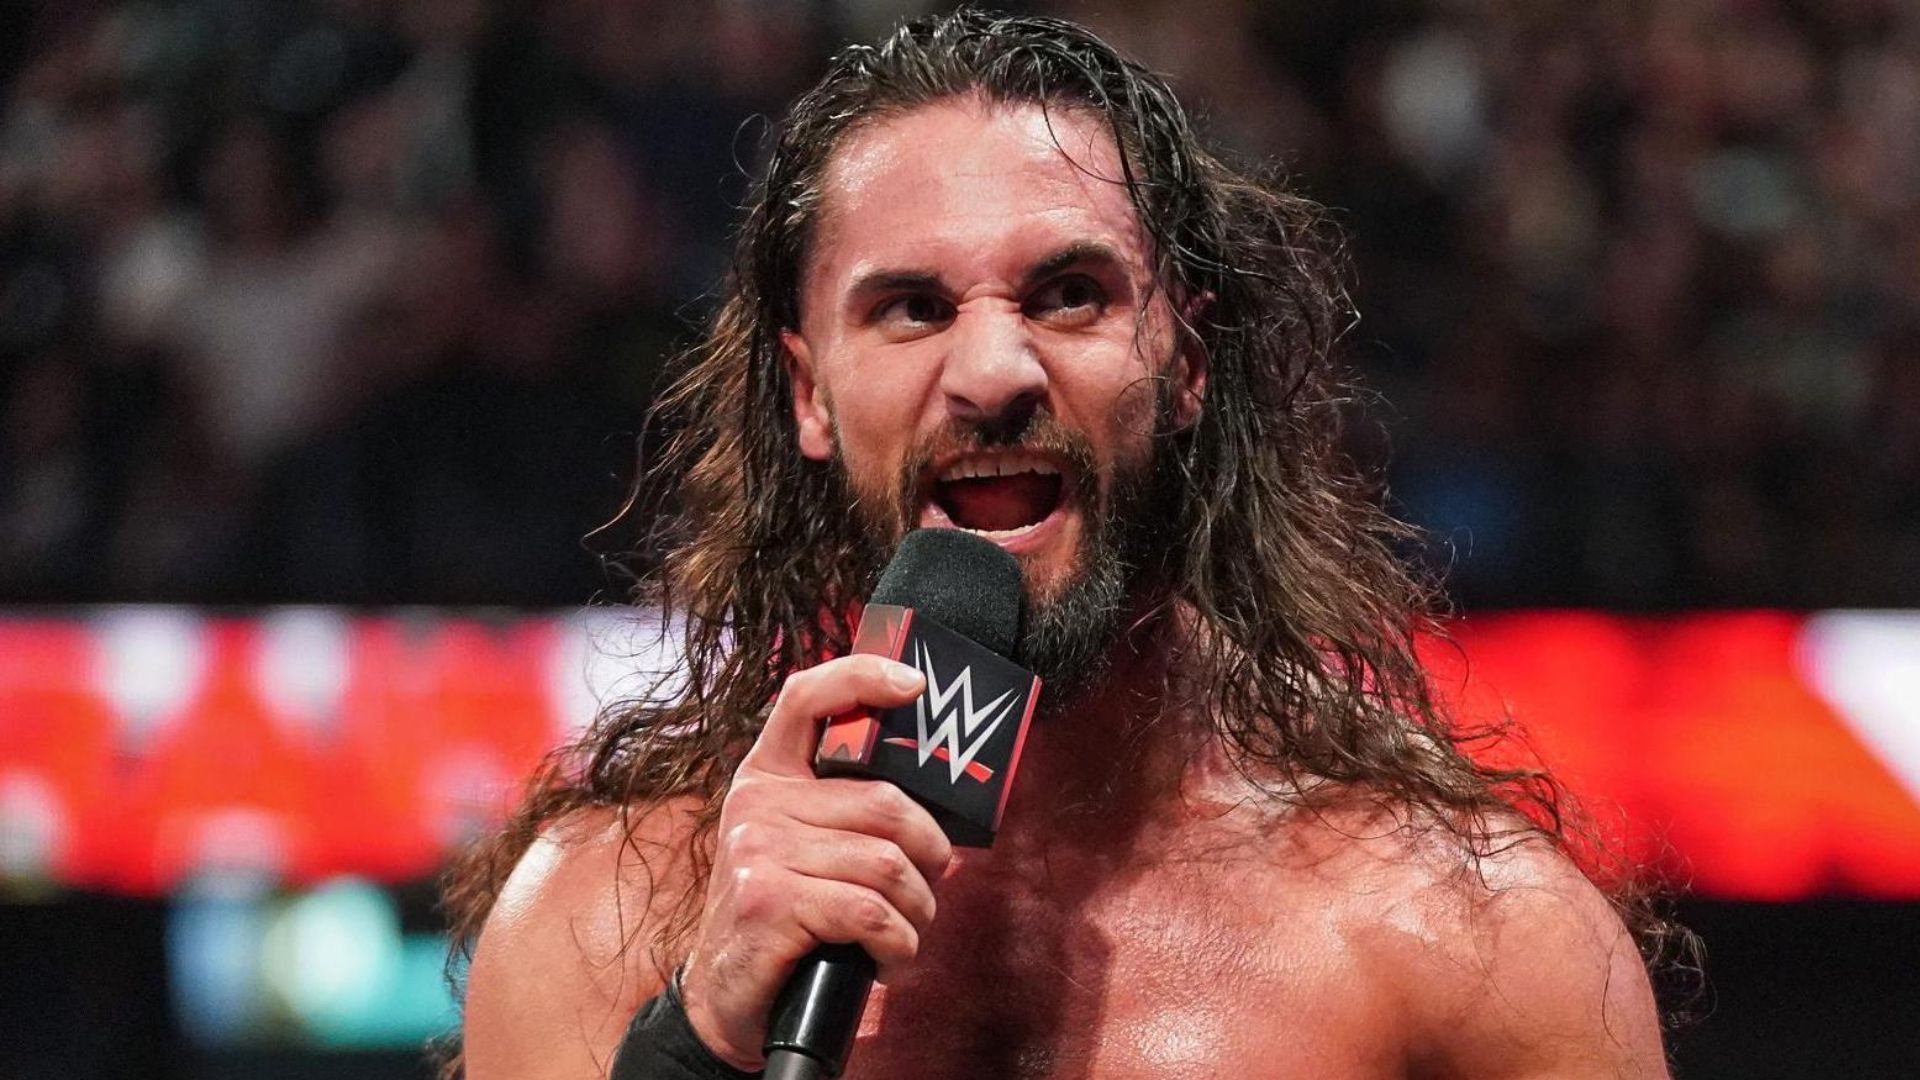 WWE RAW star Seth Rollins delivering a promo